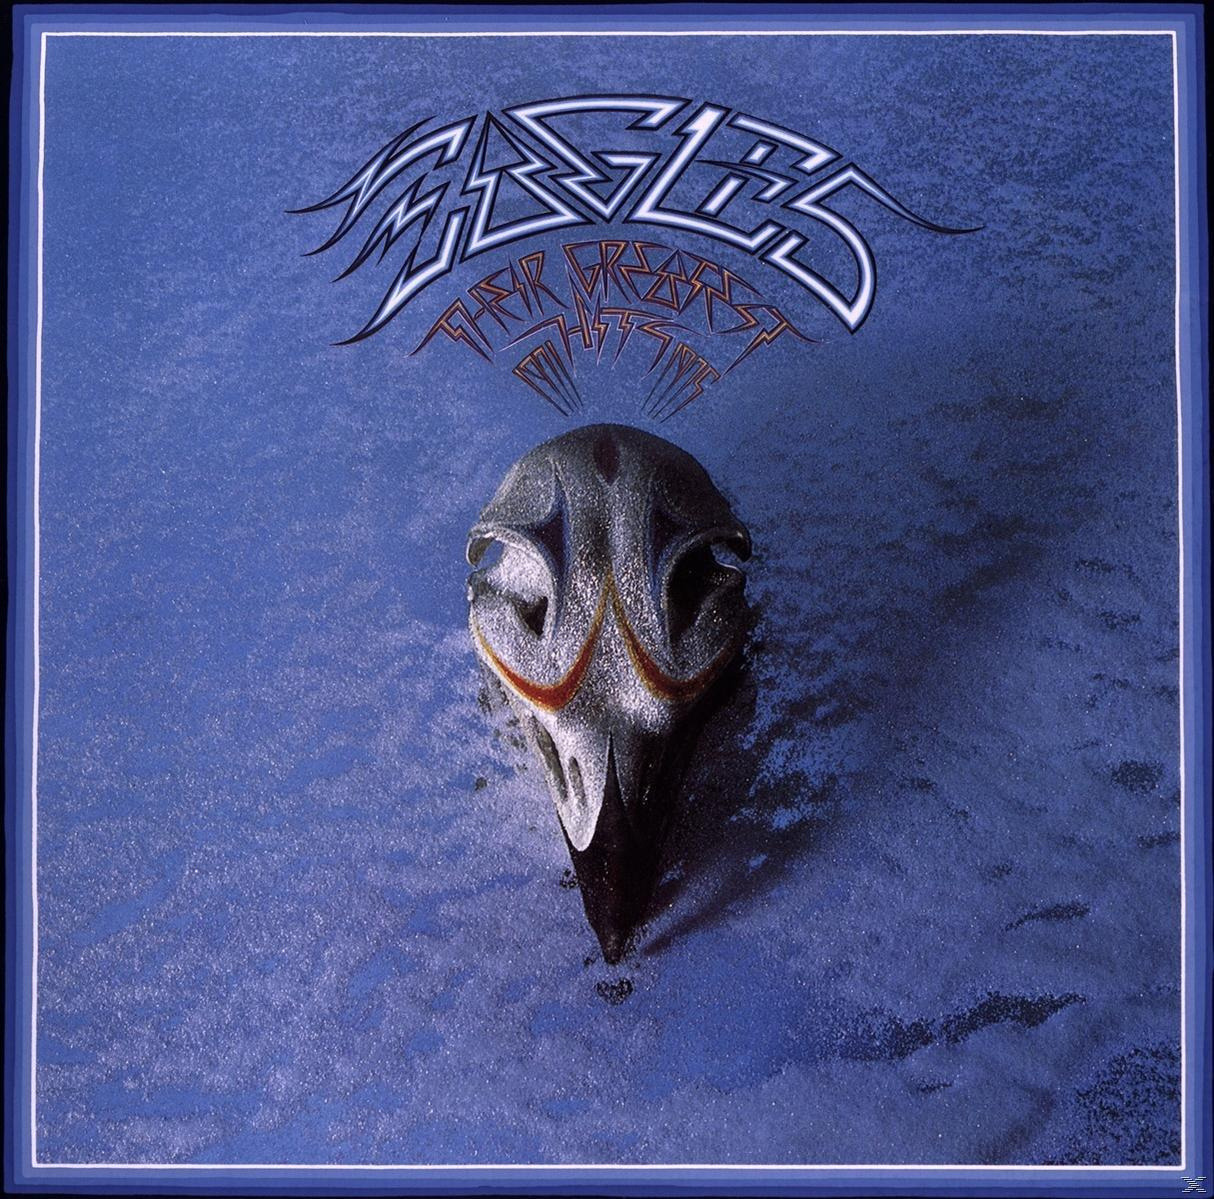 Eagles - Their Greatest Hits (Vinyl) 2 Volumes & - 1